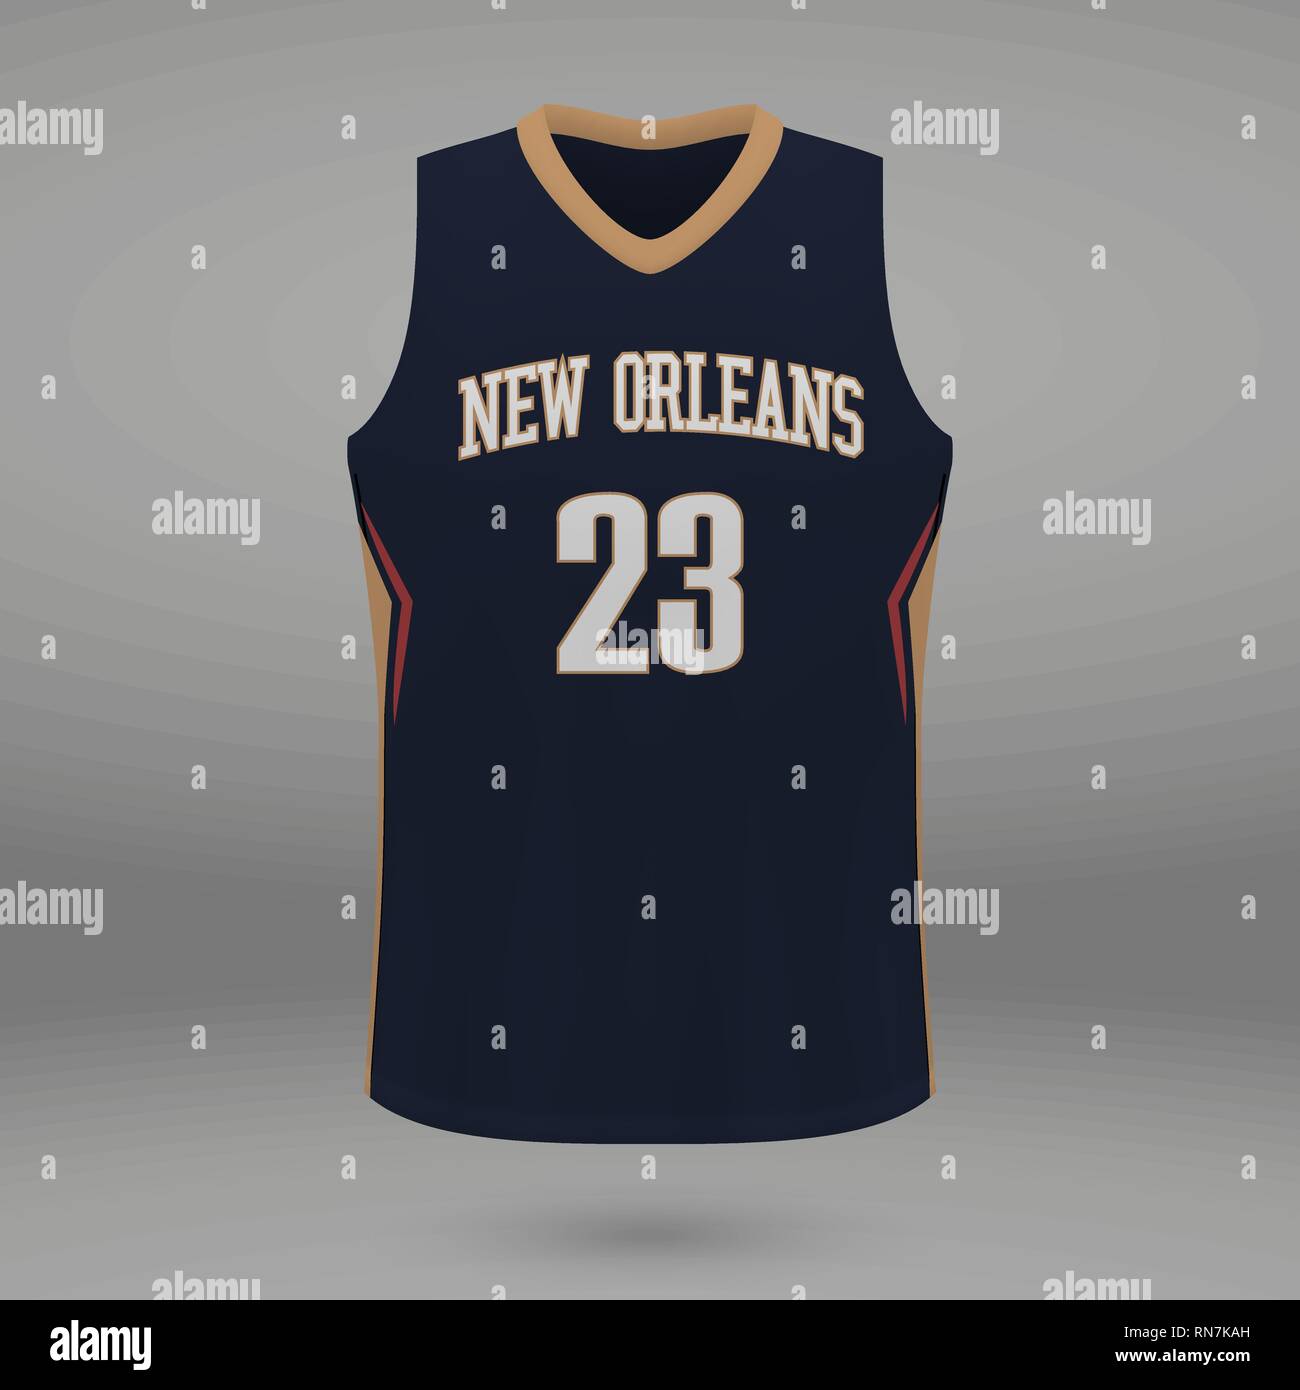 New orleans pelicans nba jersey design 144 pattern